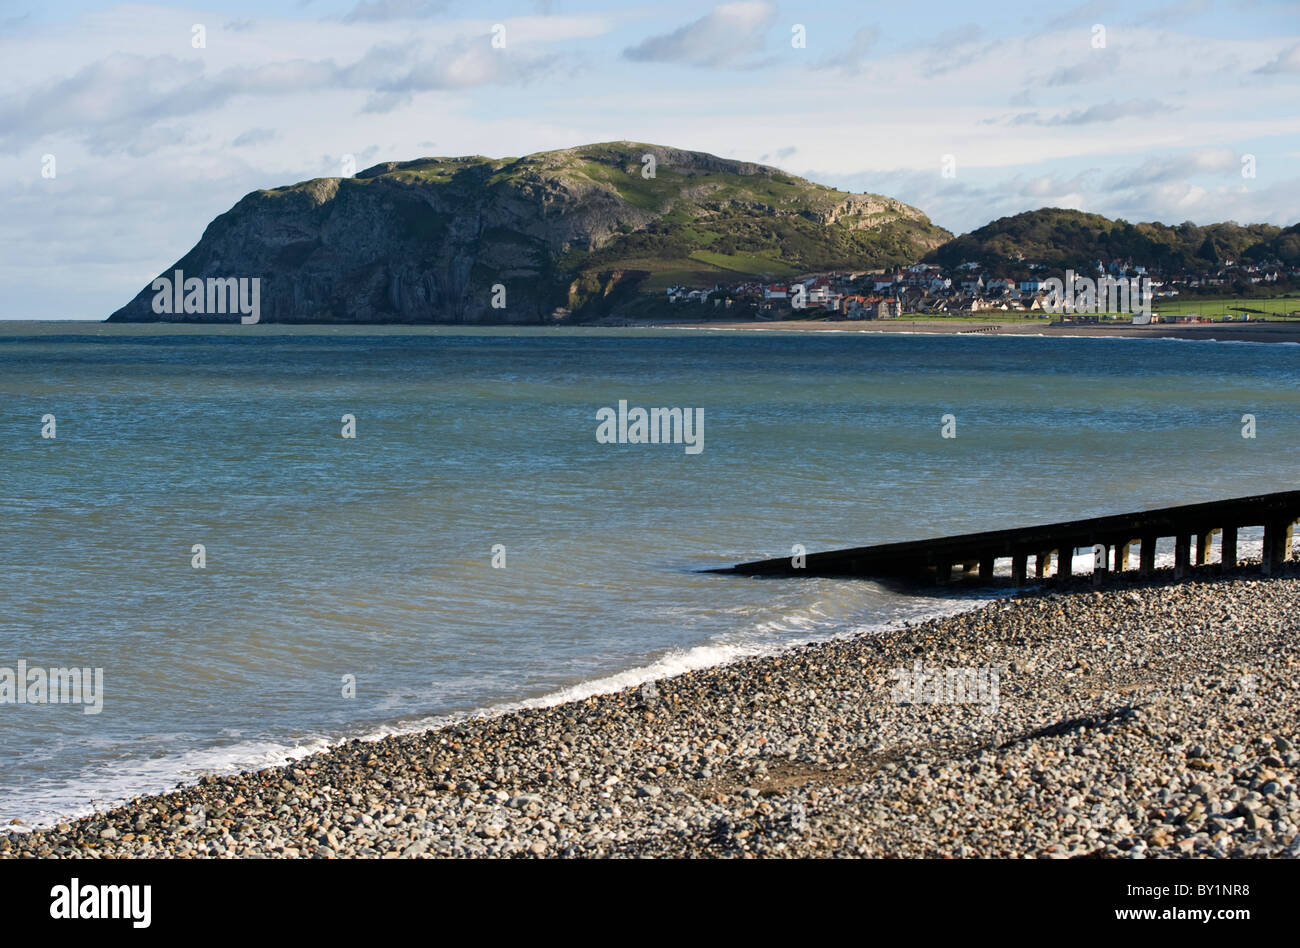 UK, North Wales; Llandudno. A boat ramp on the seafront at the Victorian seaside town of Llandudno Stock Photo